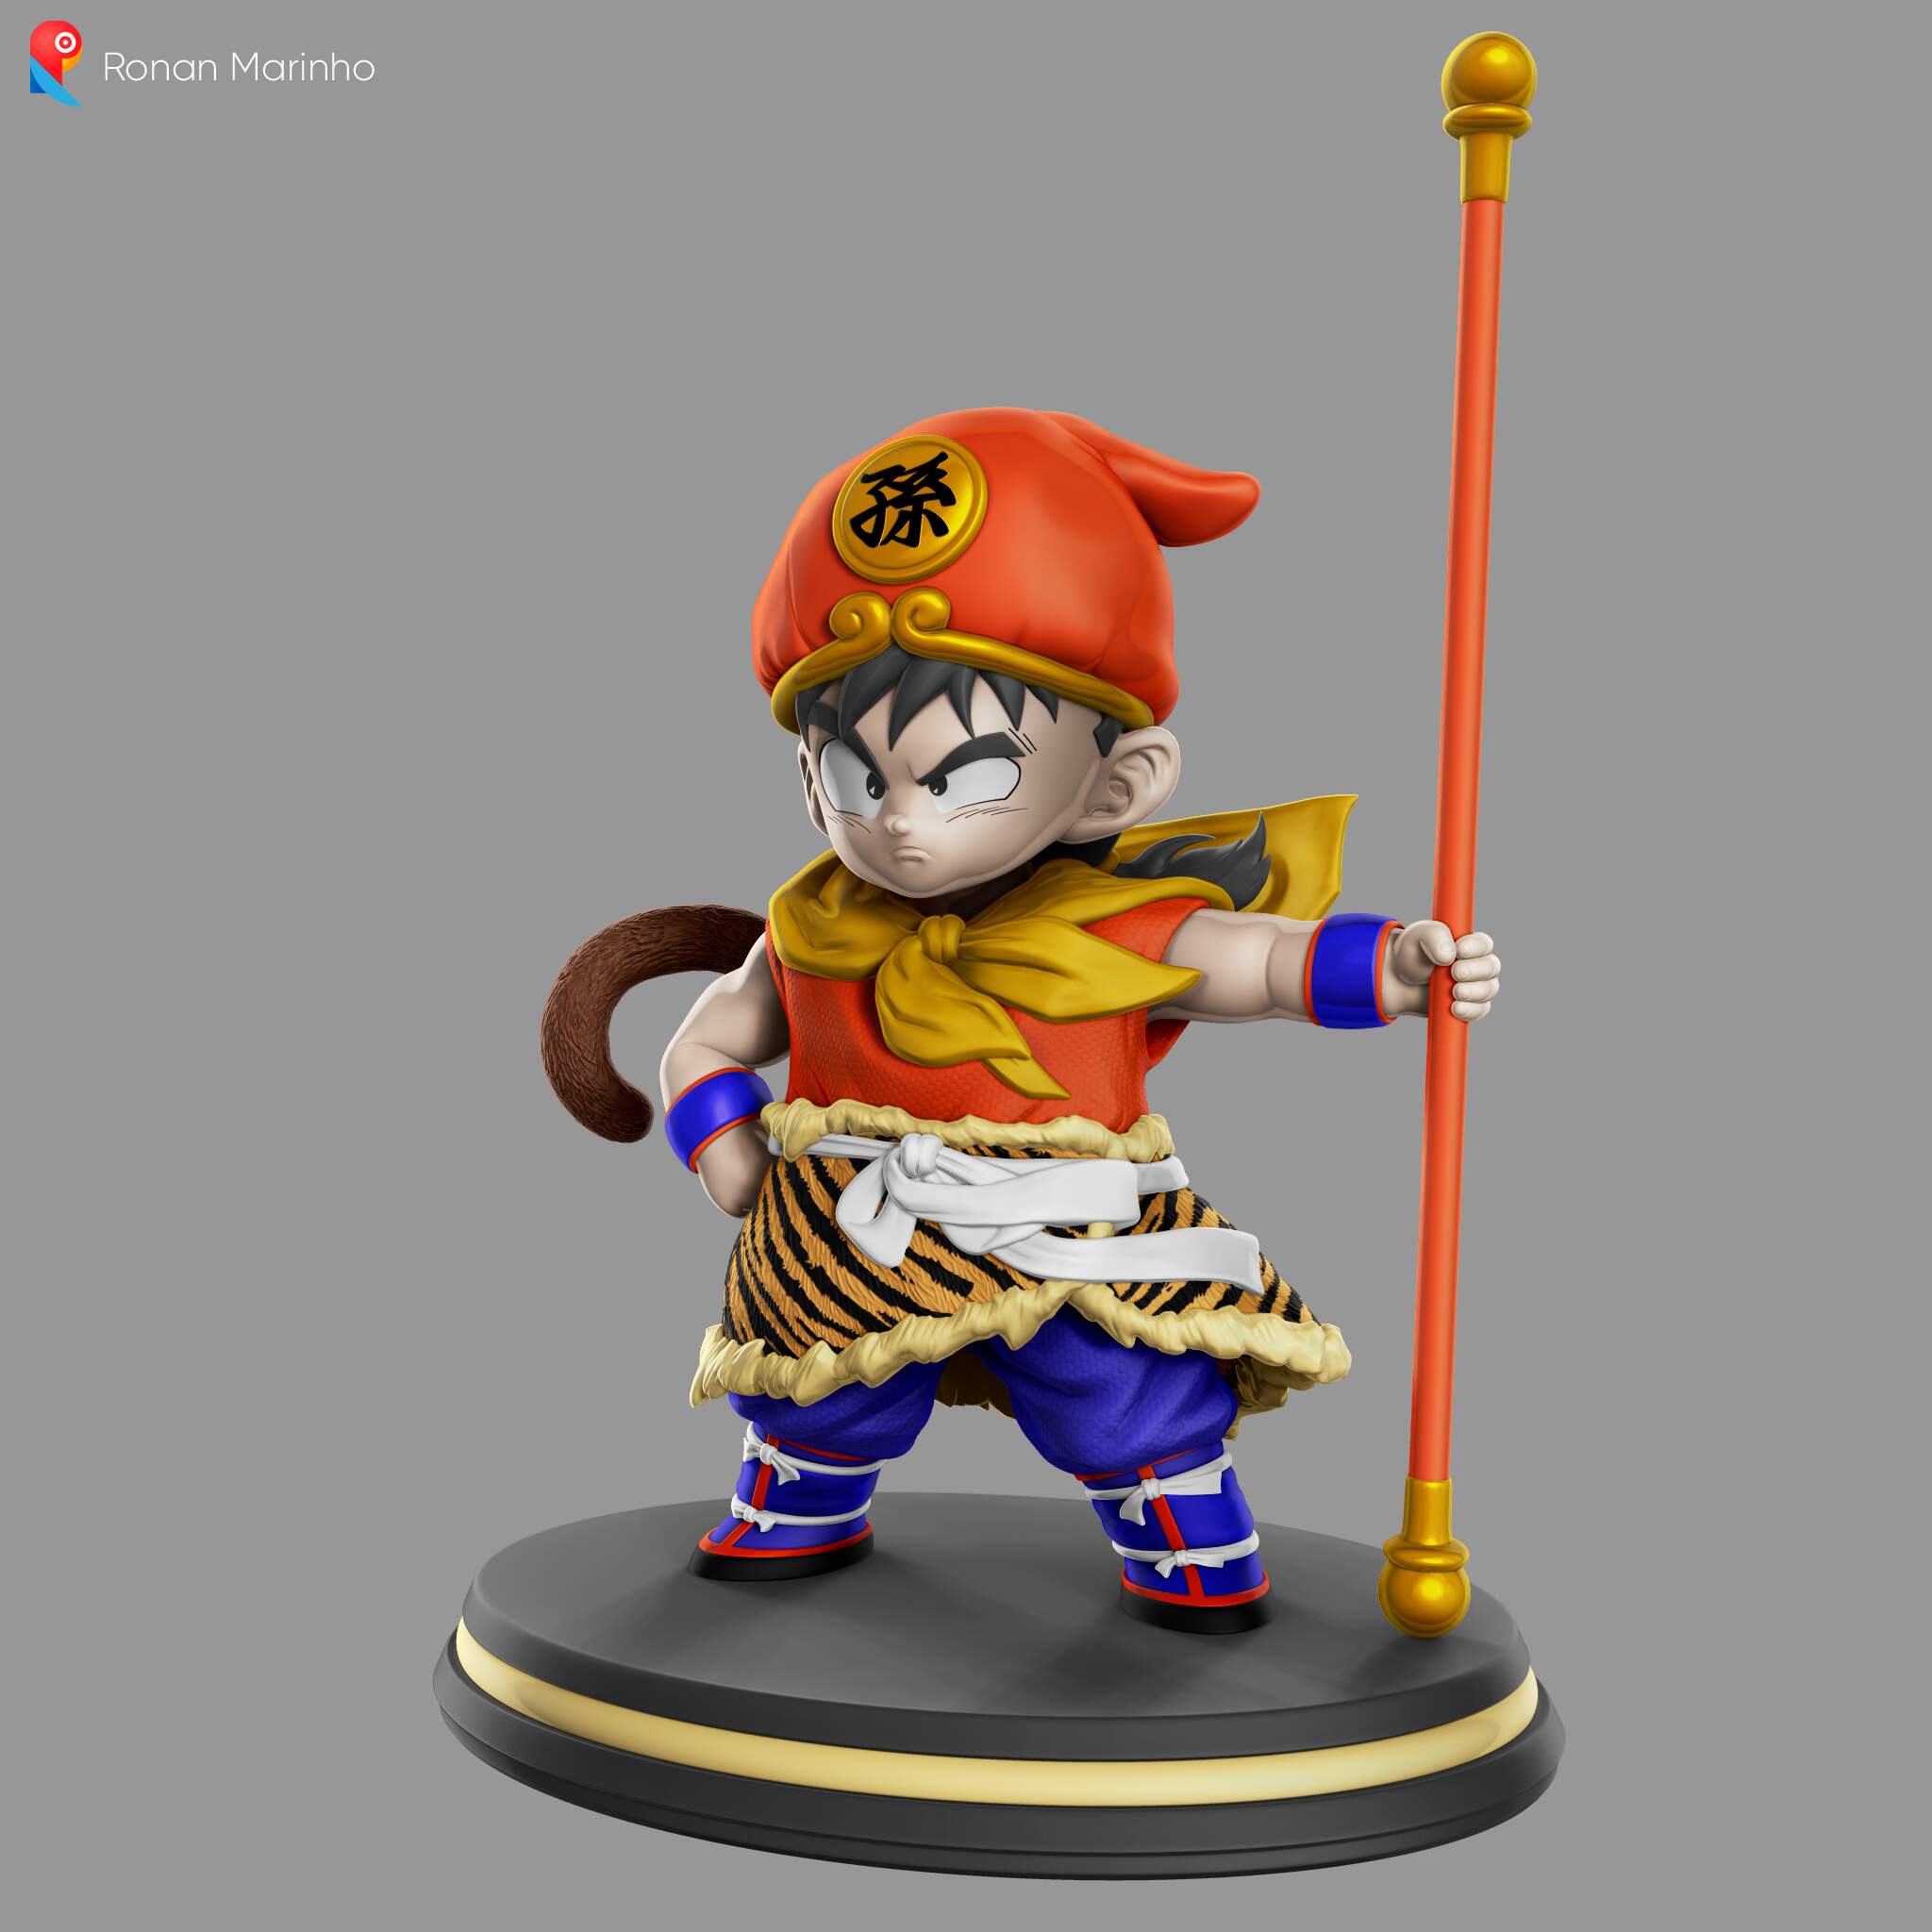 Son of The Anime King 1 - Free 3D Model by kianshoja